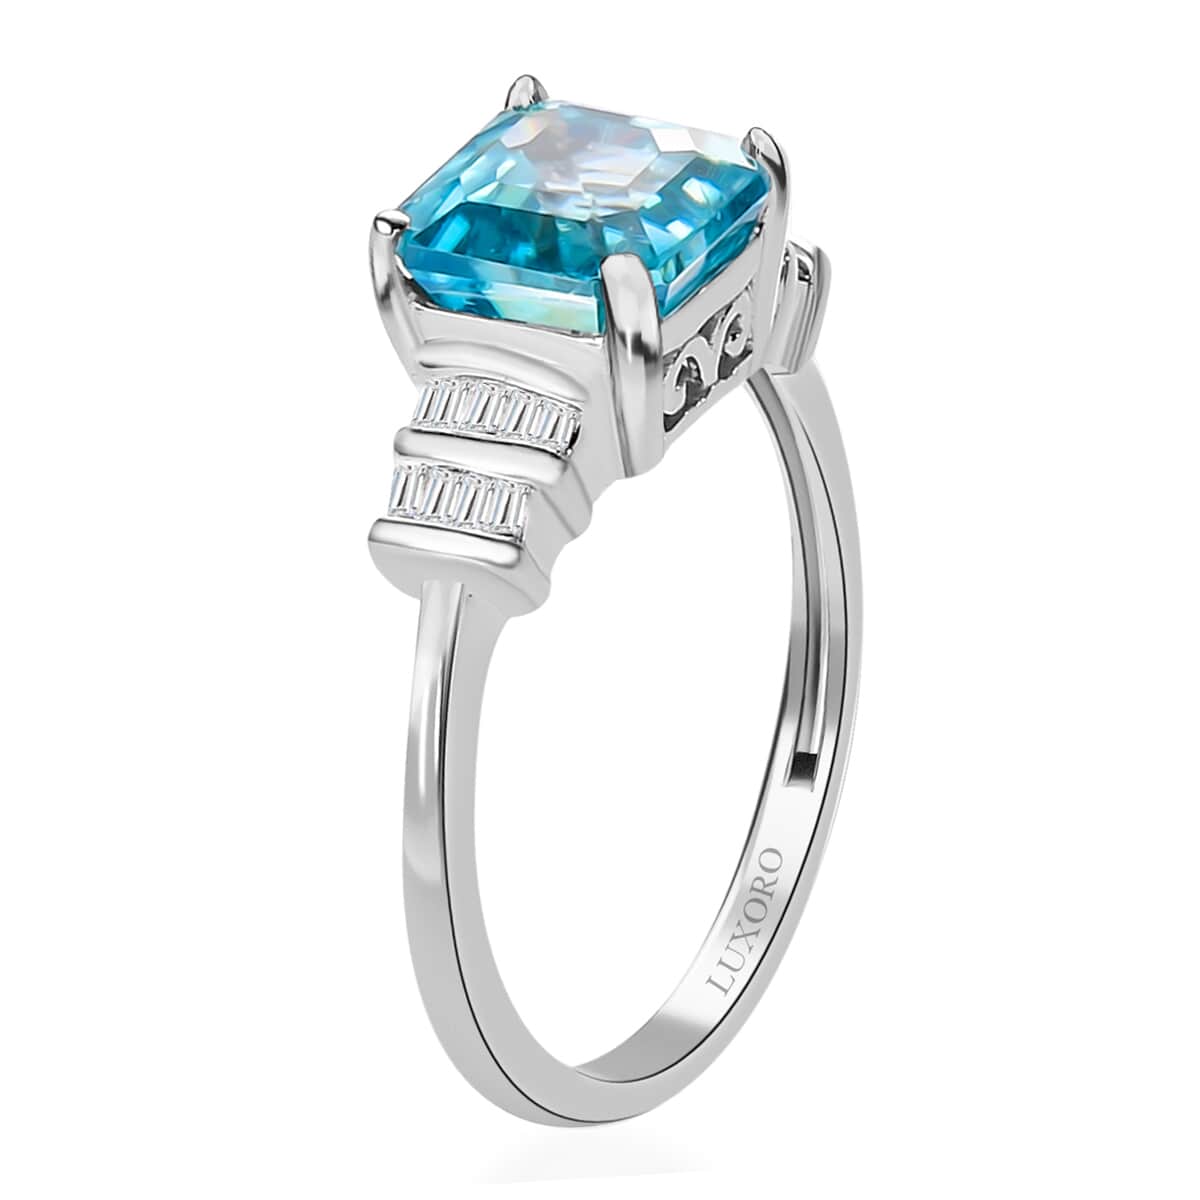 Luxoro 10K White Gold Asscher Cut Premium Ratanakiri Blue Zircon amd Diamond Ring (Size 10.0) 3.15 ctw image number 3